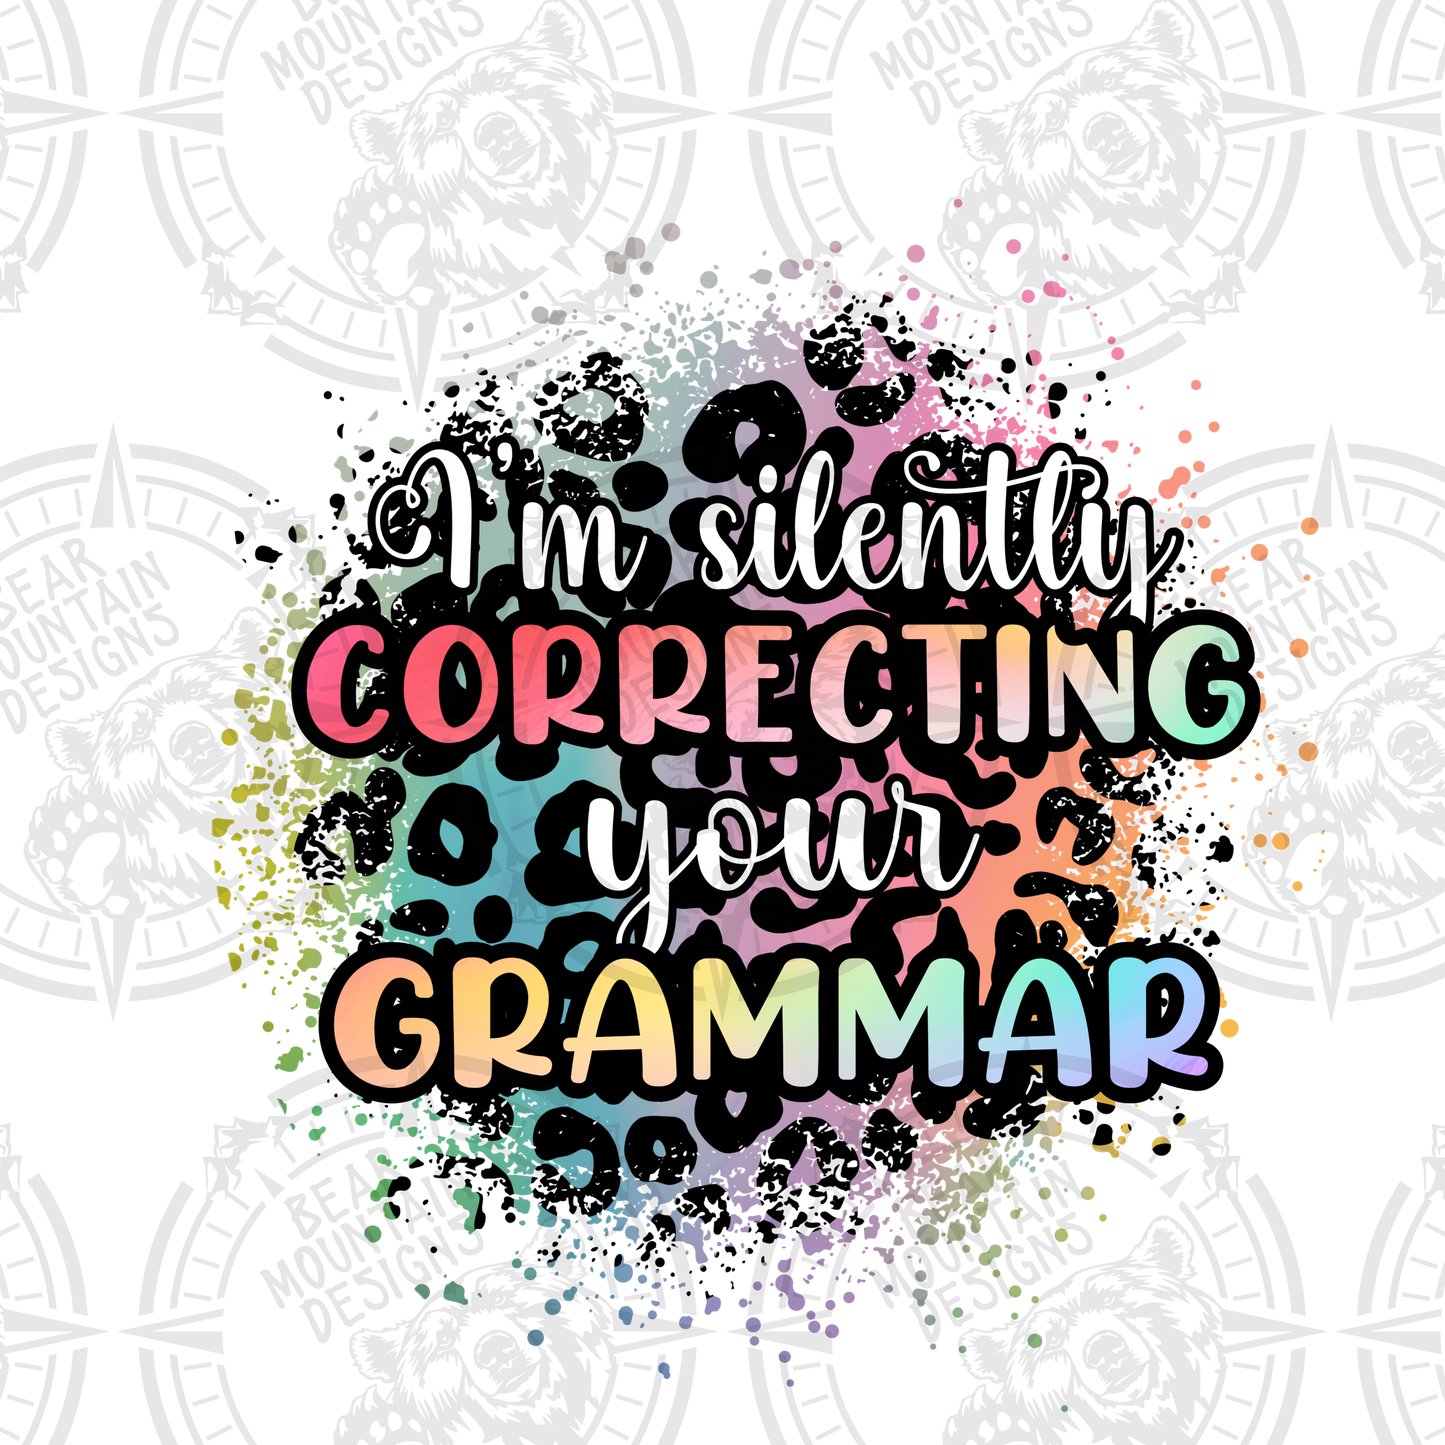 Silently Correcting Your Grammar